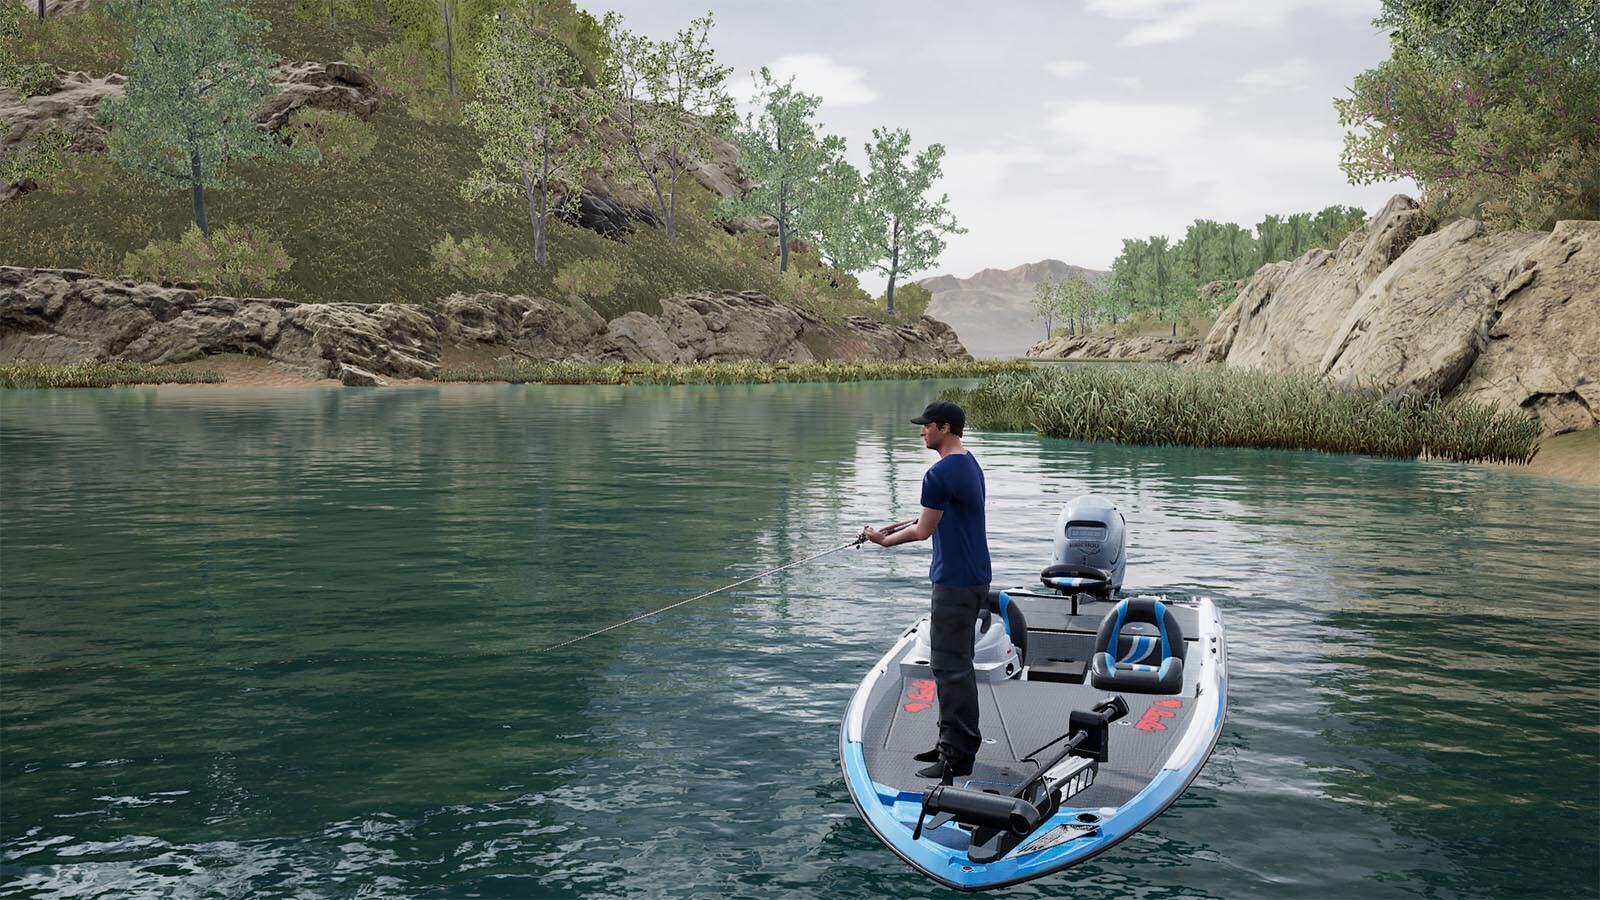 Fishing Sim World®: Pro Tour - Lake Williams Steam Key for PC - Buy now